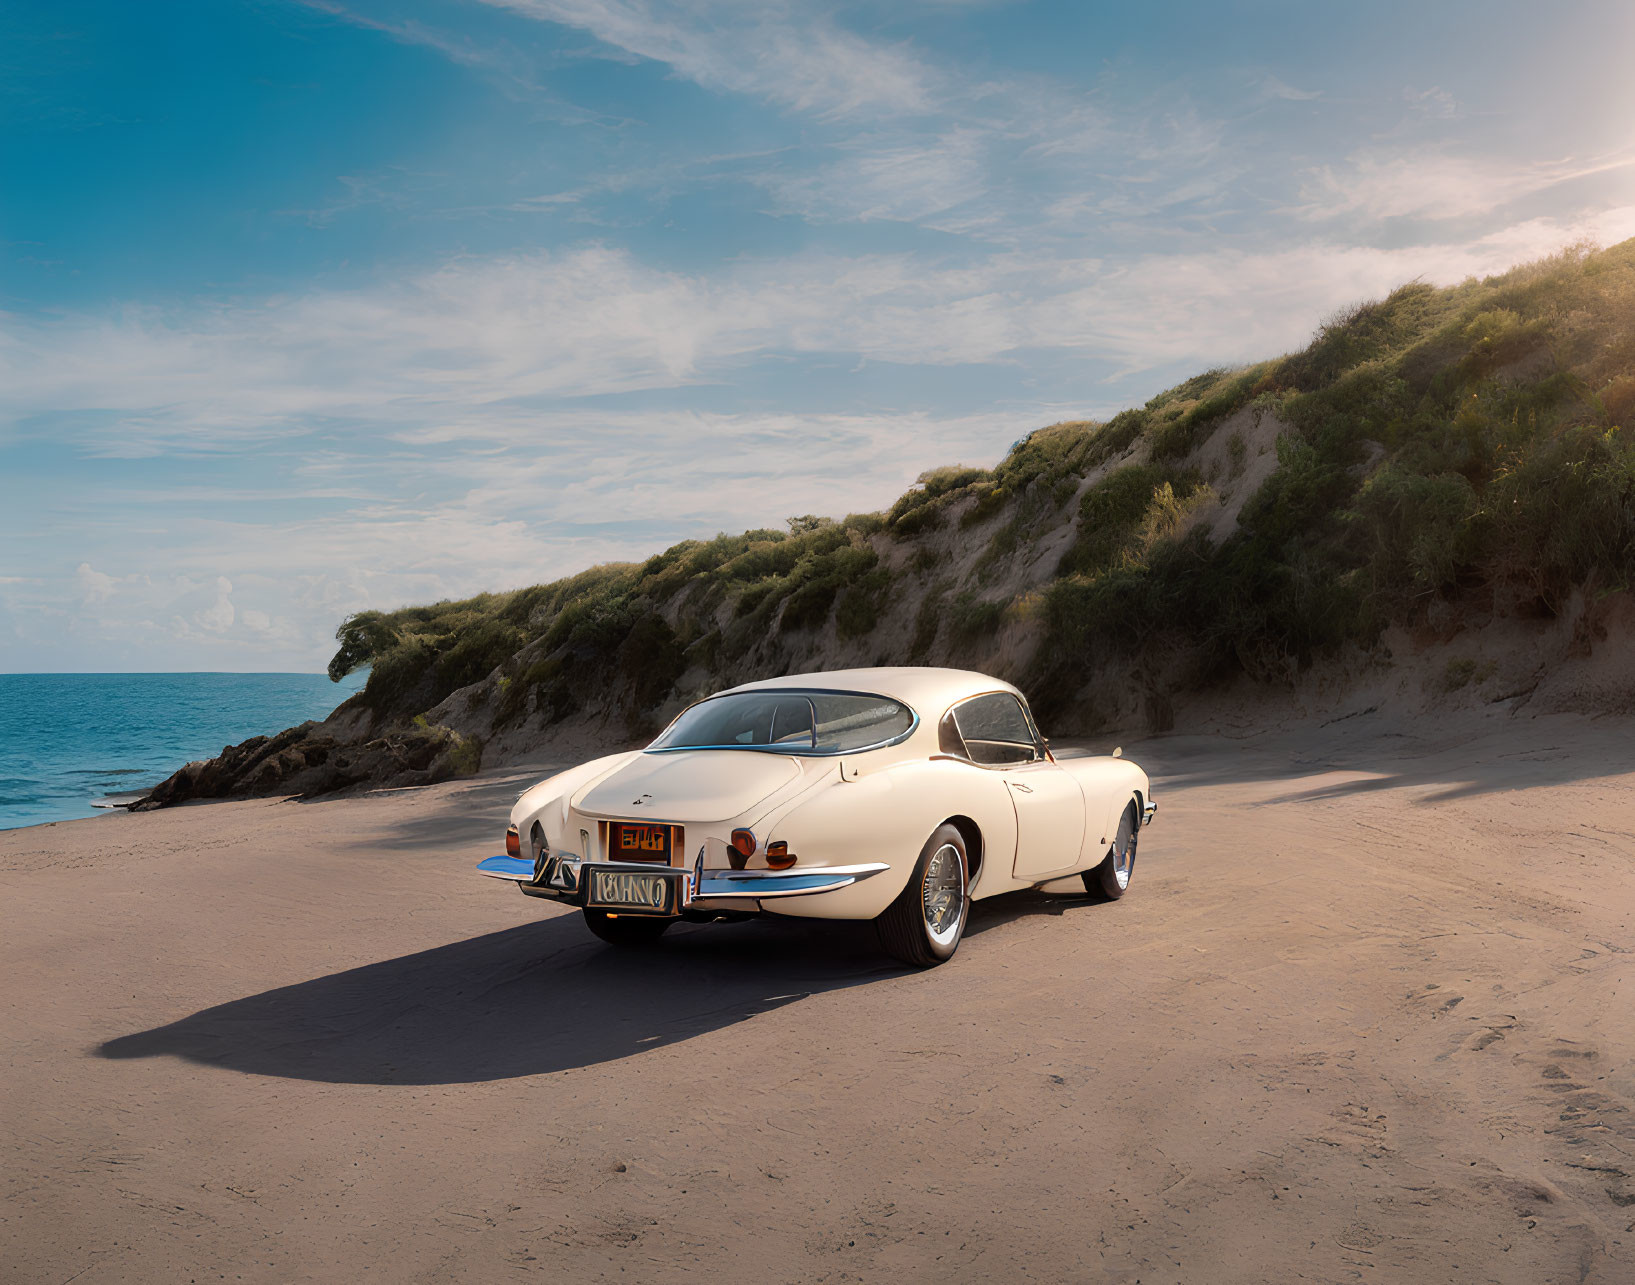 Vintage White Sports Car on Sandy Beach with Blue Sky & Sea